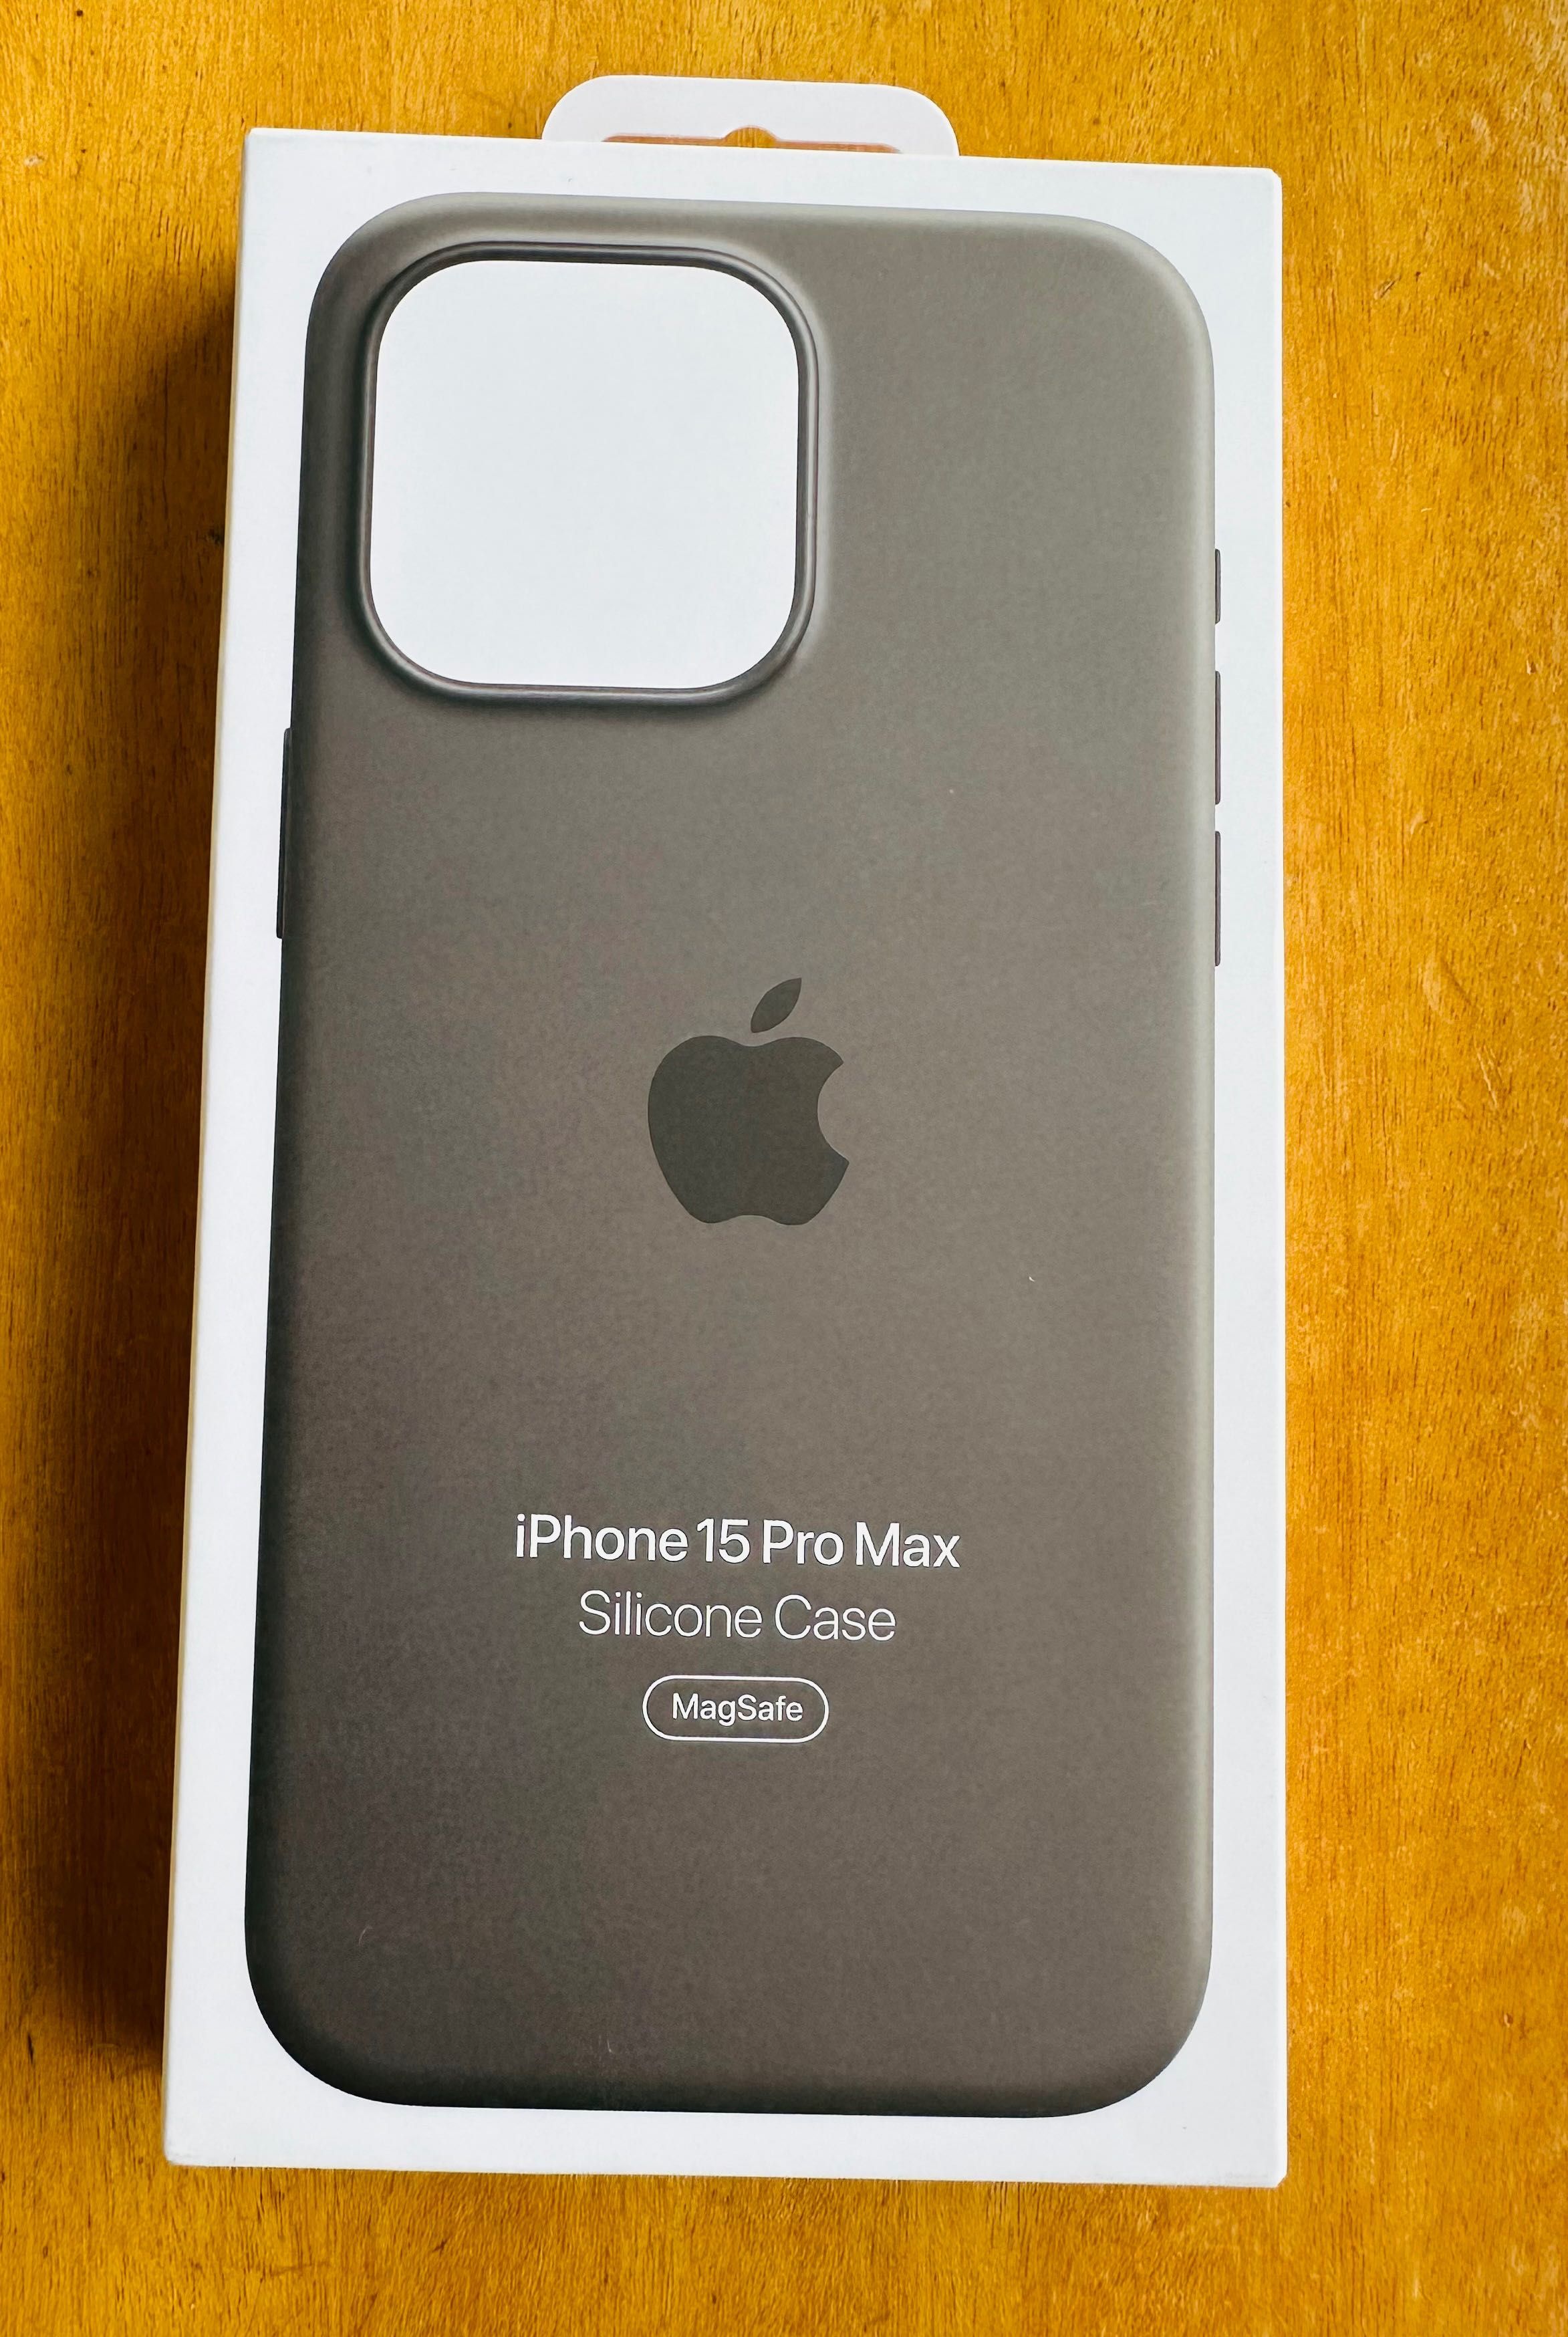 Vendo Capa de iPhone 15 pro max novo e selado